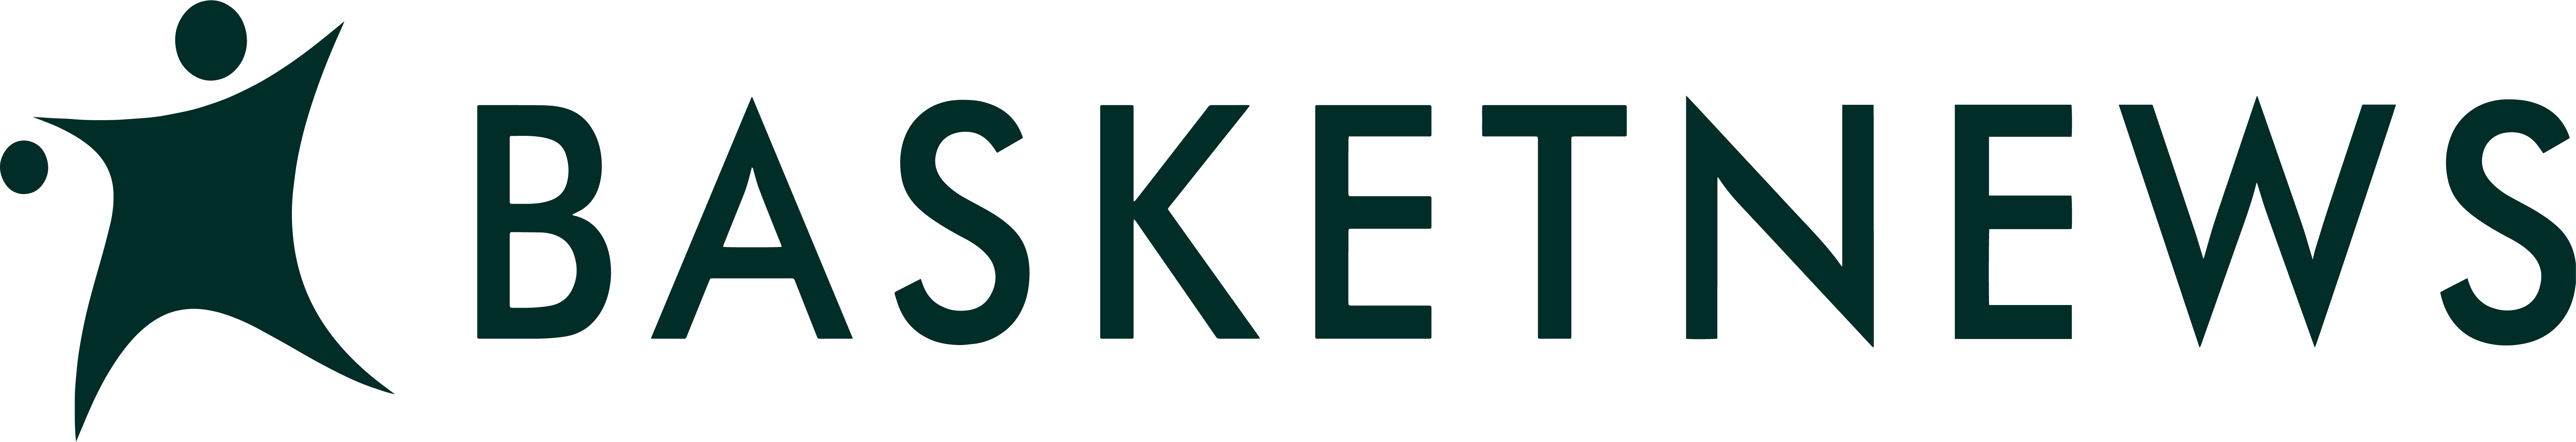 Basketnews logo